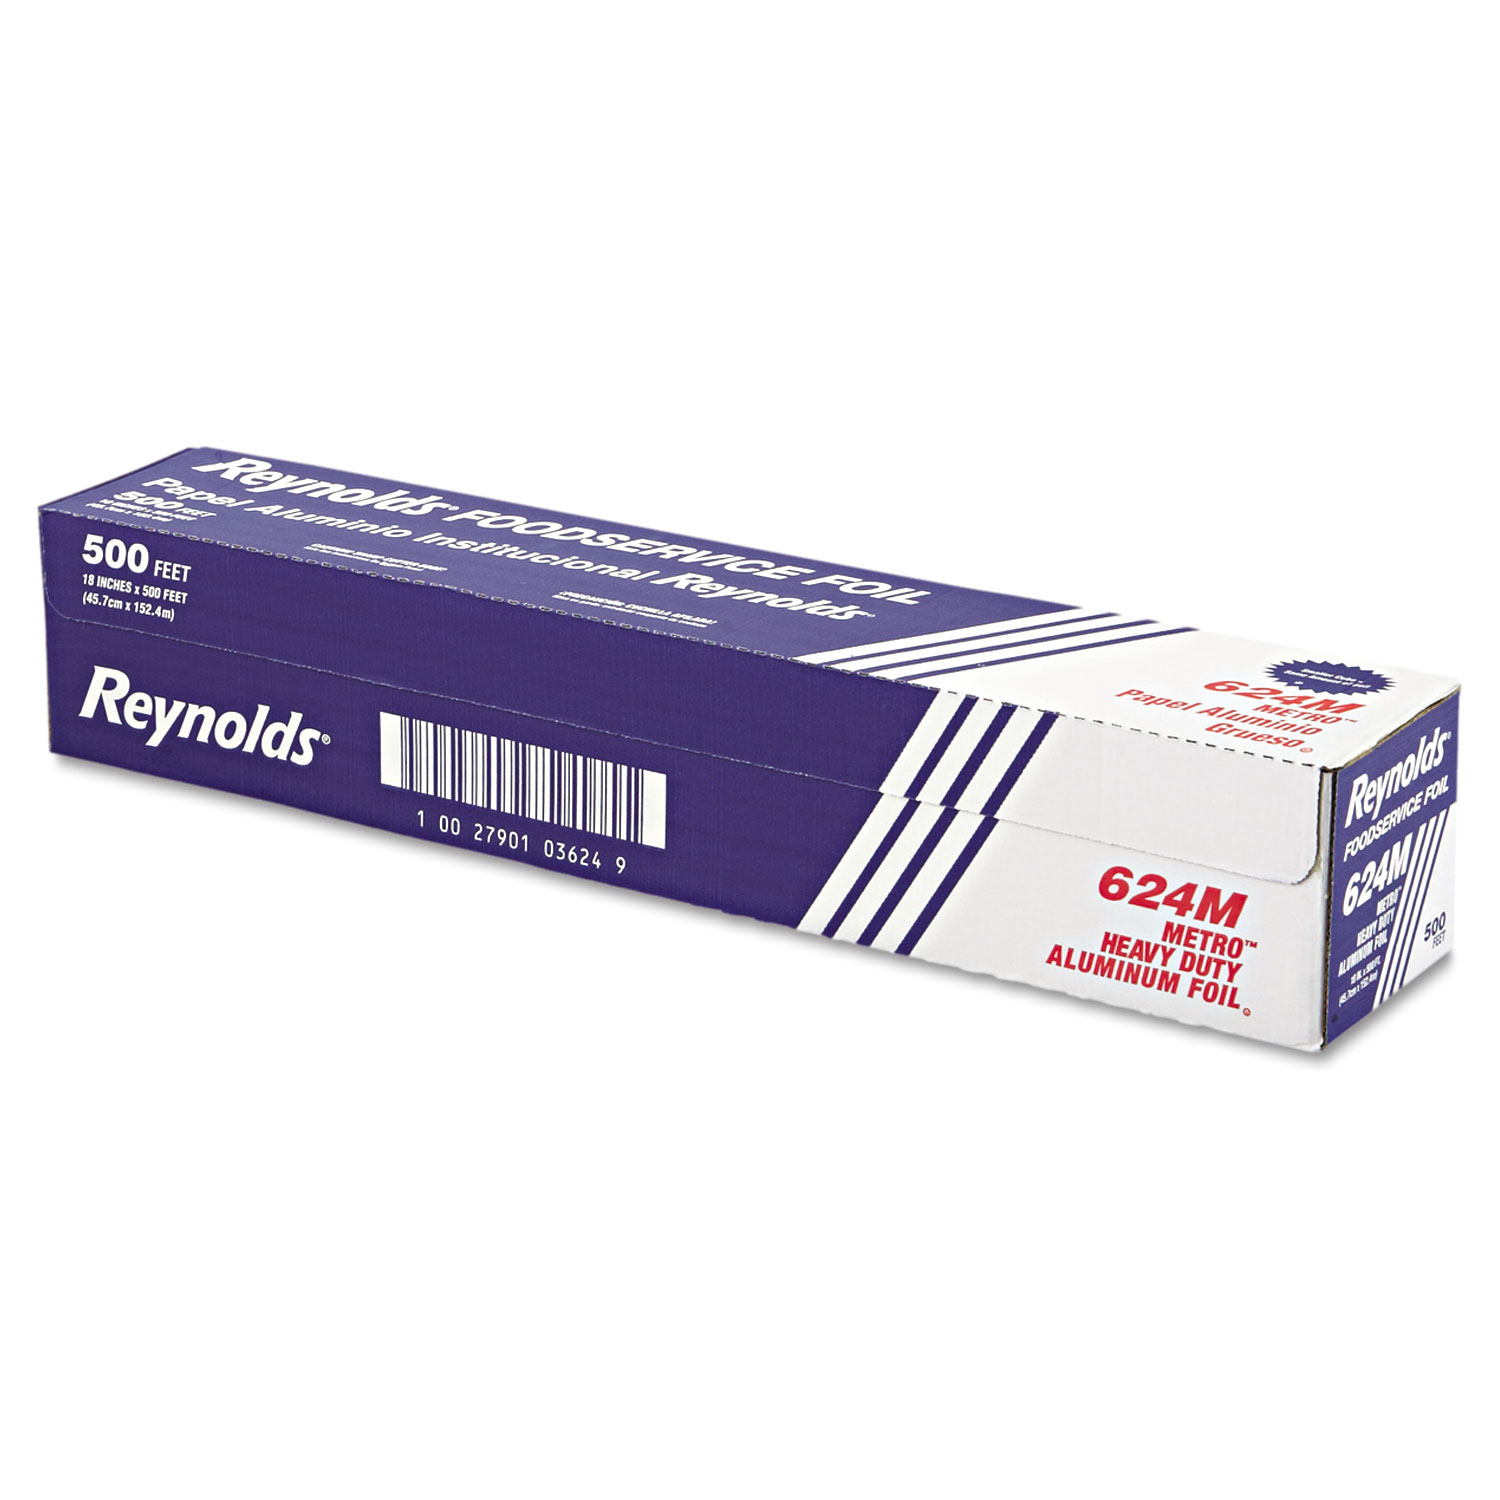  Reynolds Wrap 624M Metro Aluminum Foil Roll, Light Gauge, 18 x 500 ft, Silver (RFP624M) 